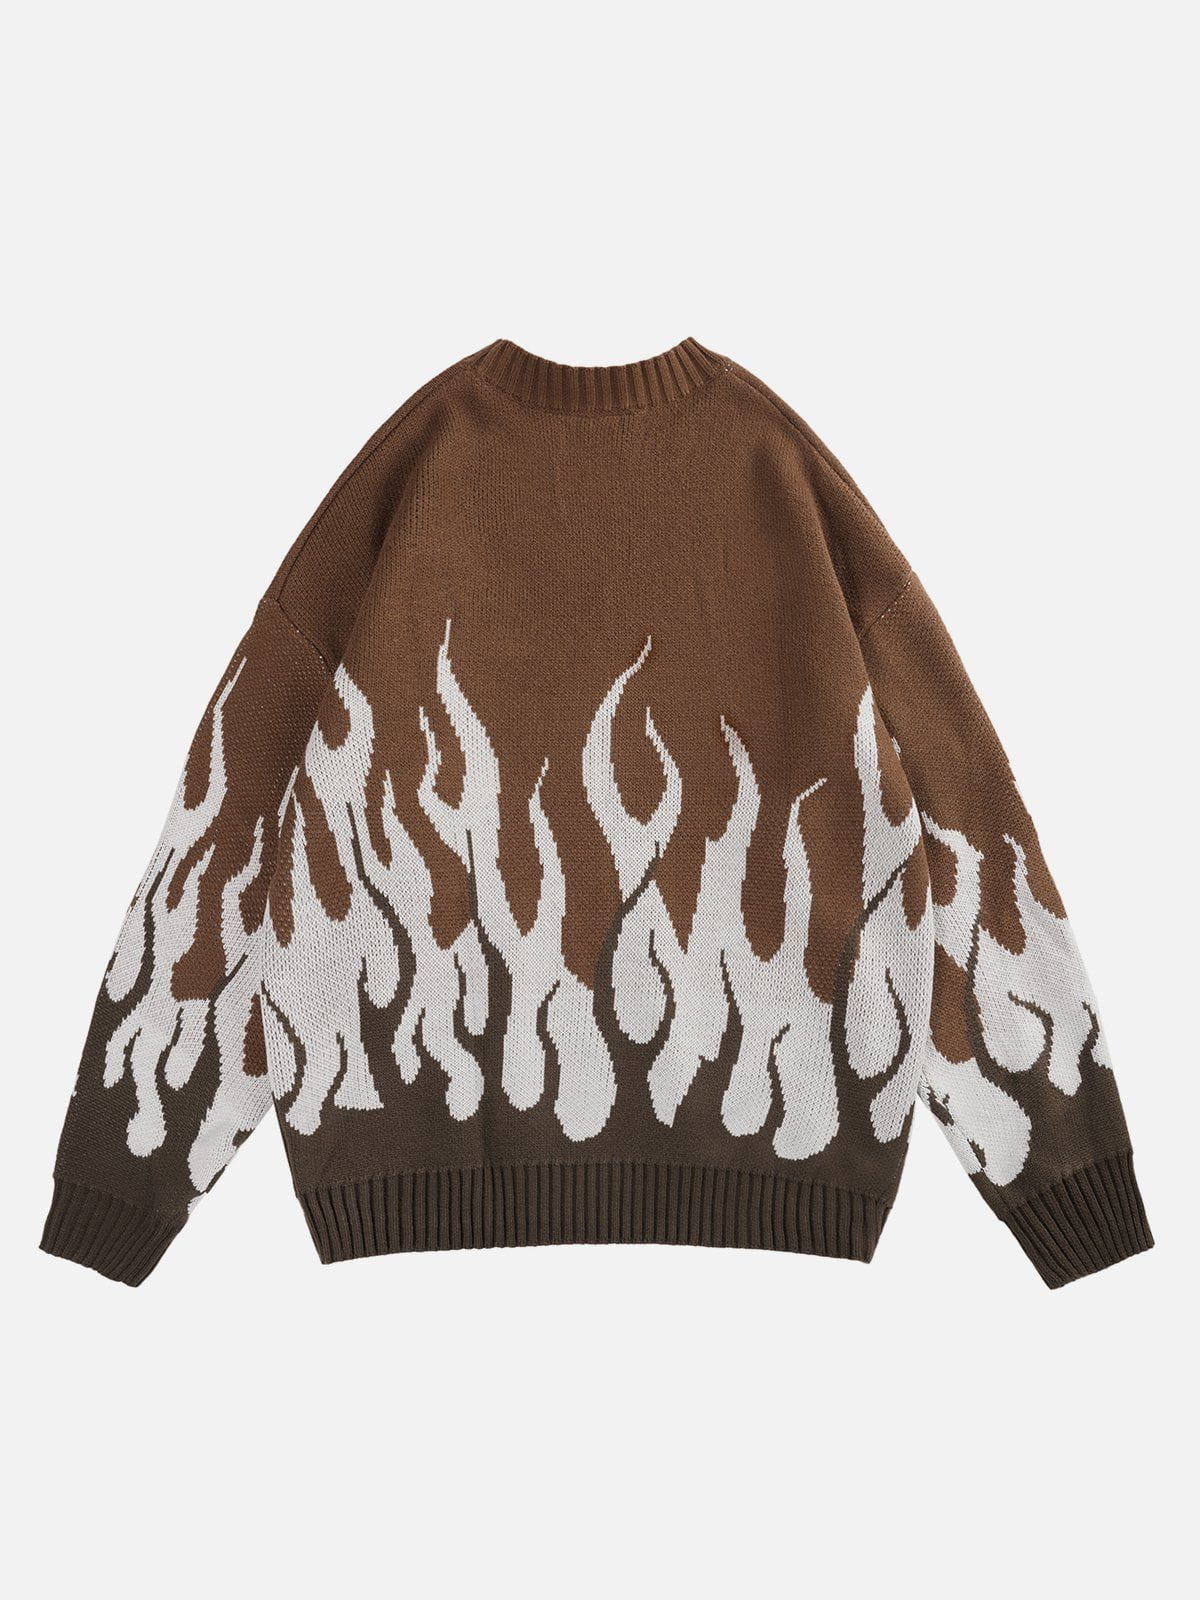 Majesda® - Flame Print Sweater outfit ideas streetwear fashion